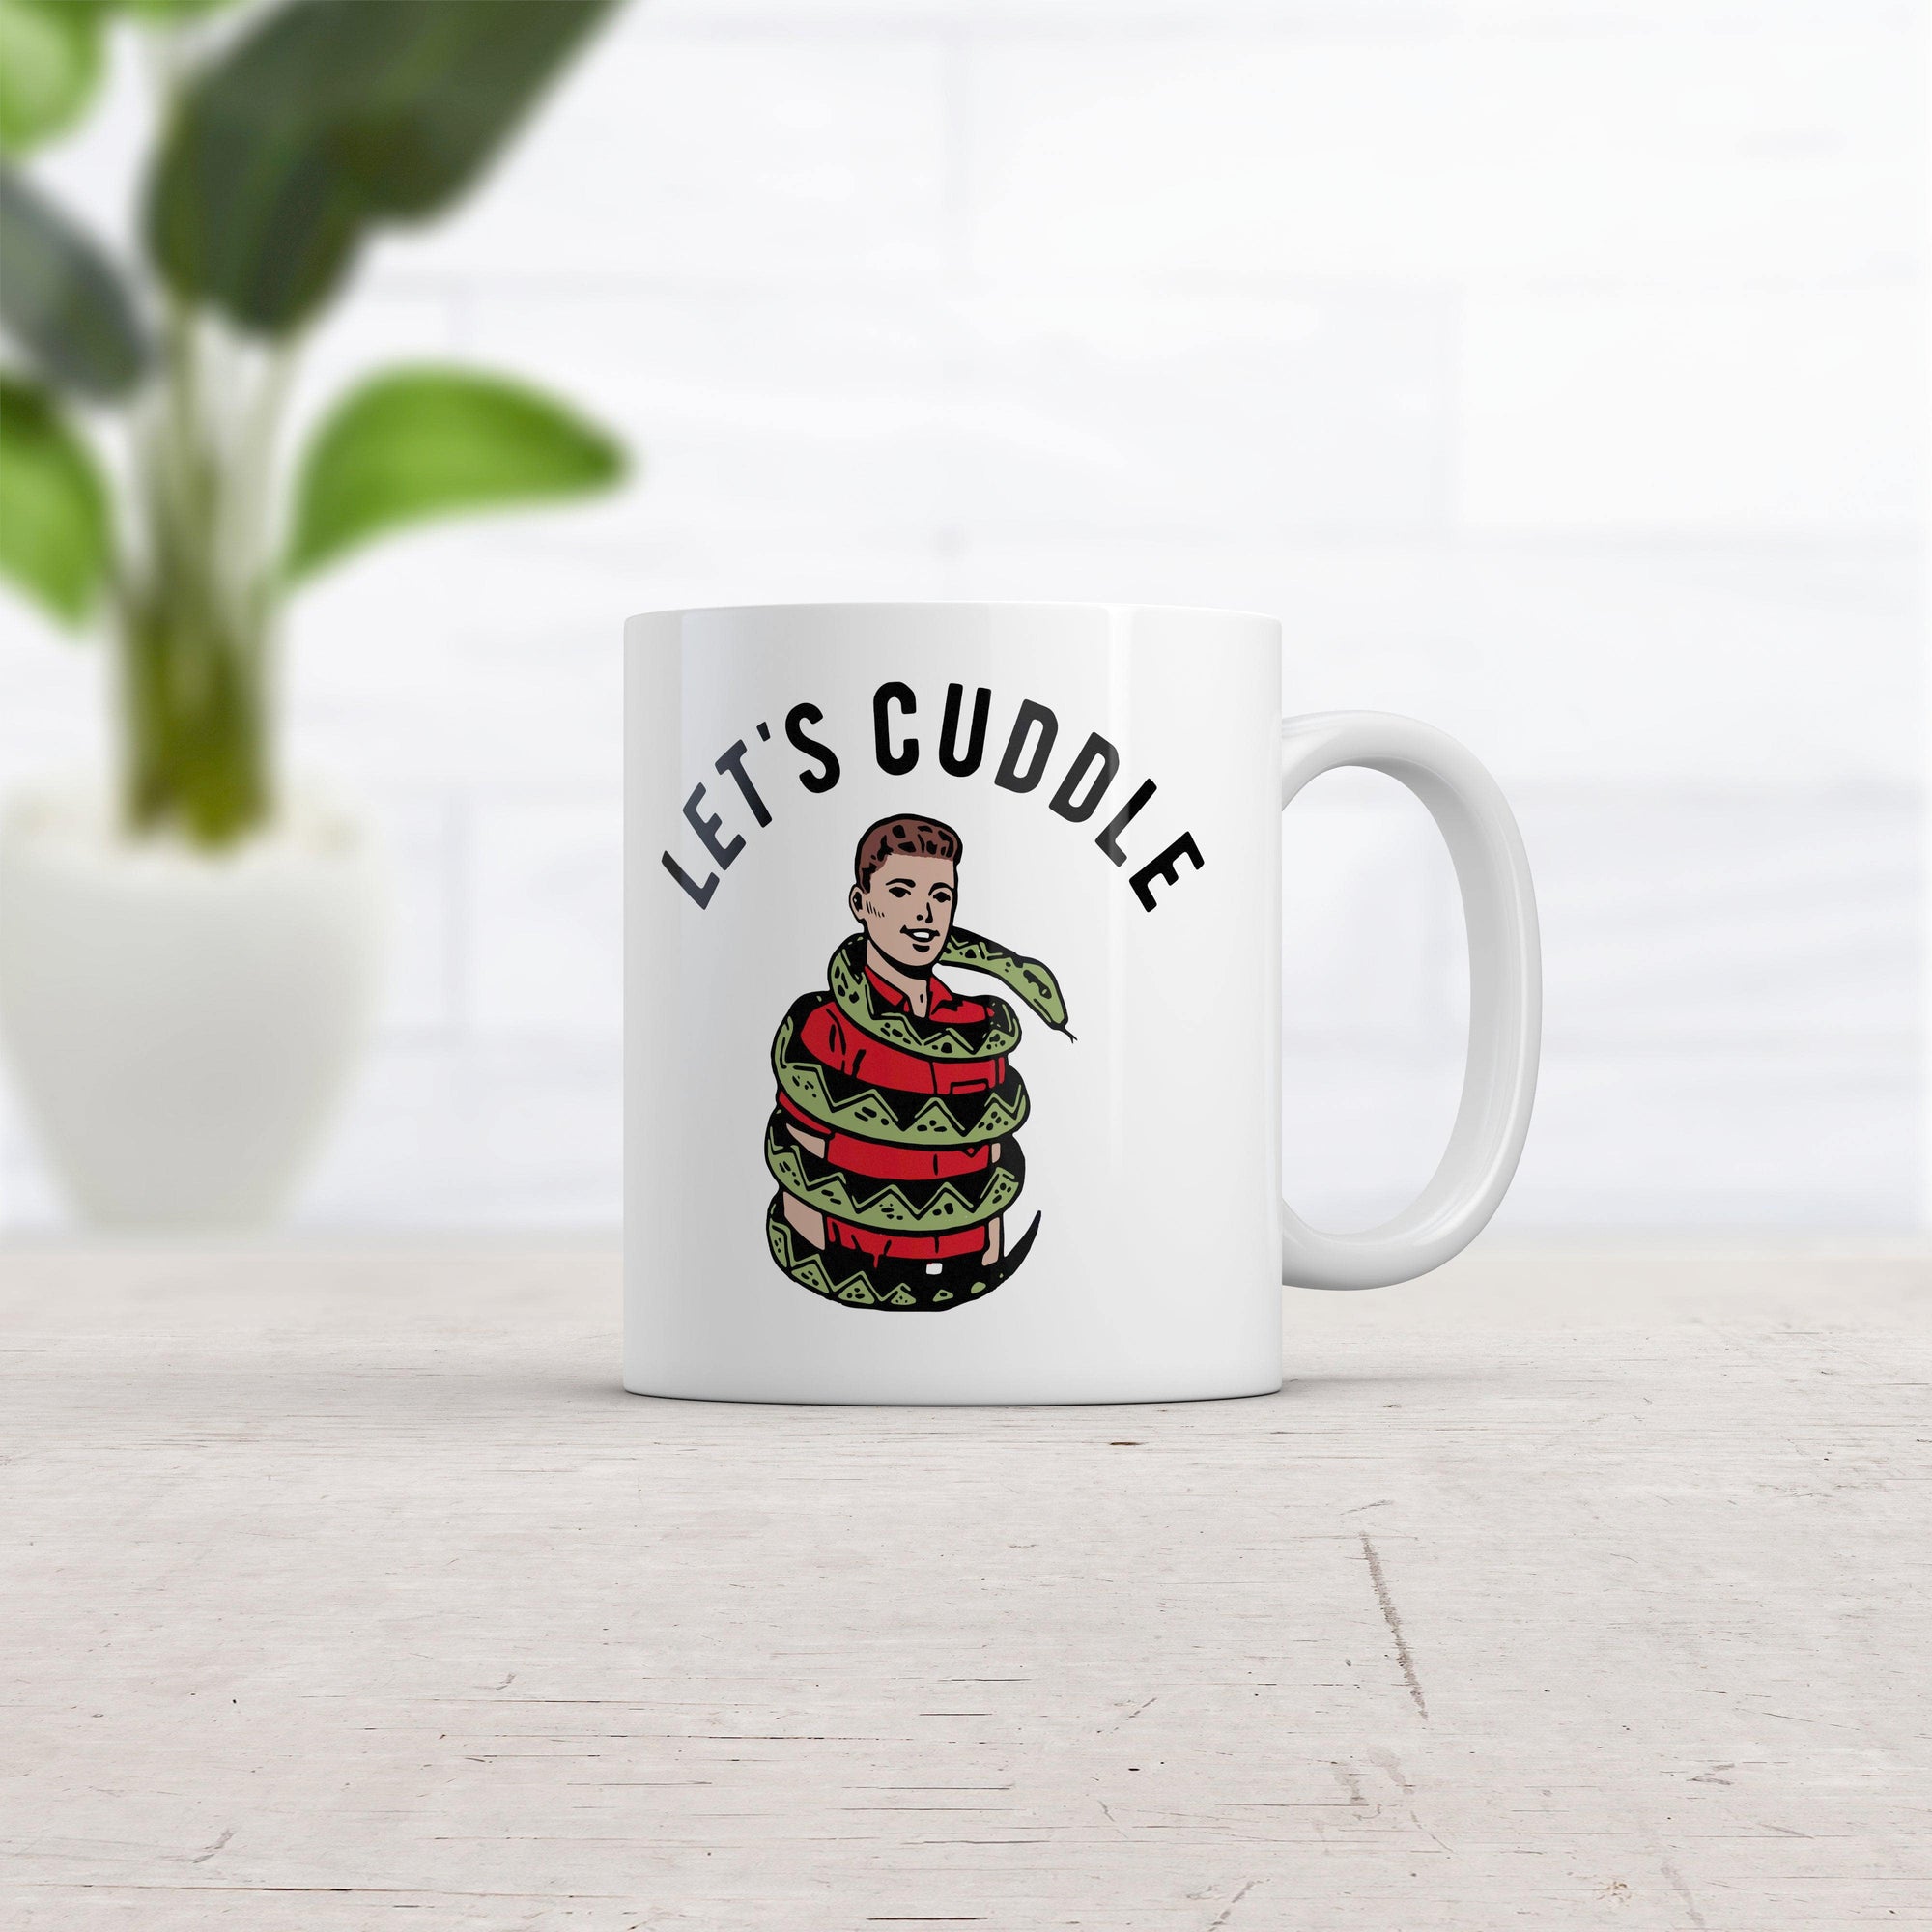 Lets Cuddle Mug Funny Sarcastic Snake Hug Graphic Novelty Coffee Cup-11oz  -  Crazy Dog T-Shirts